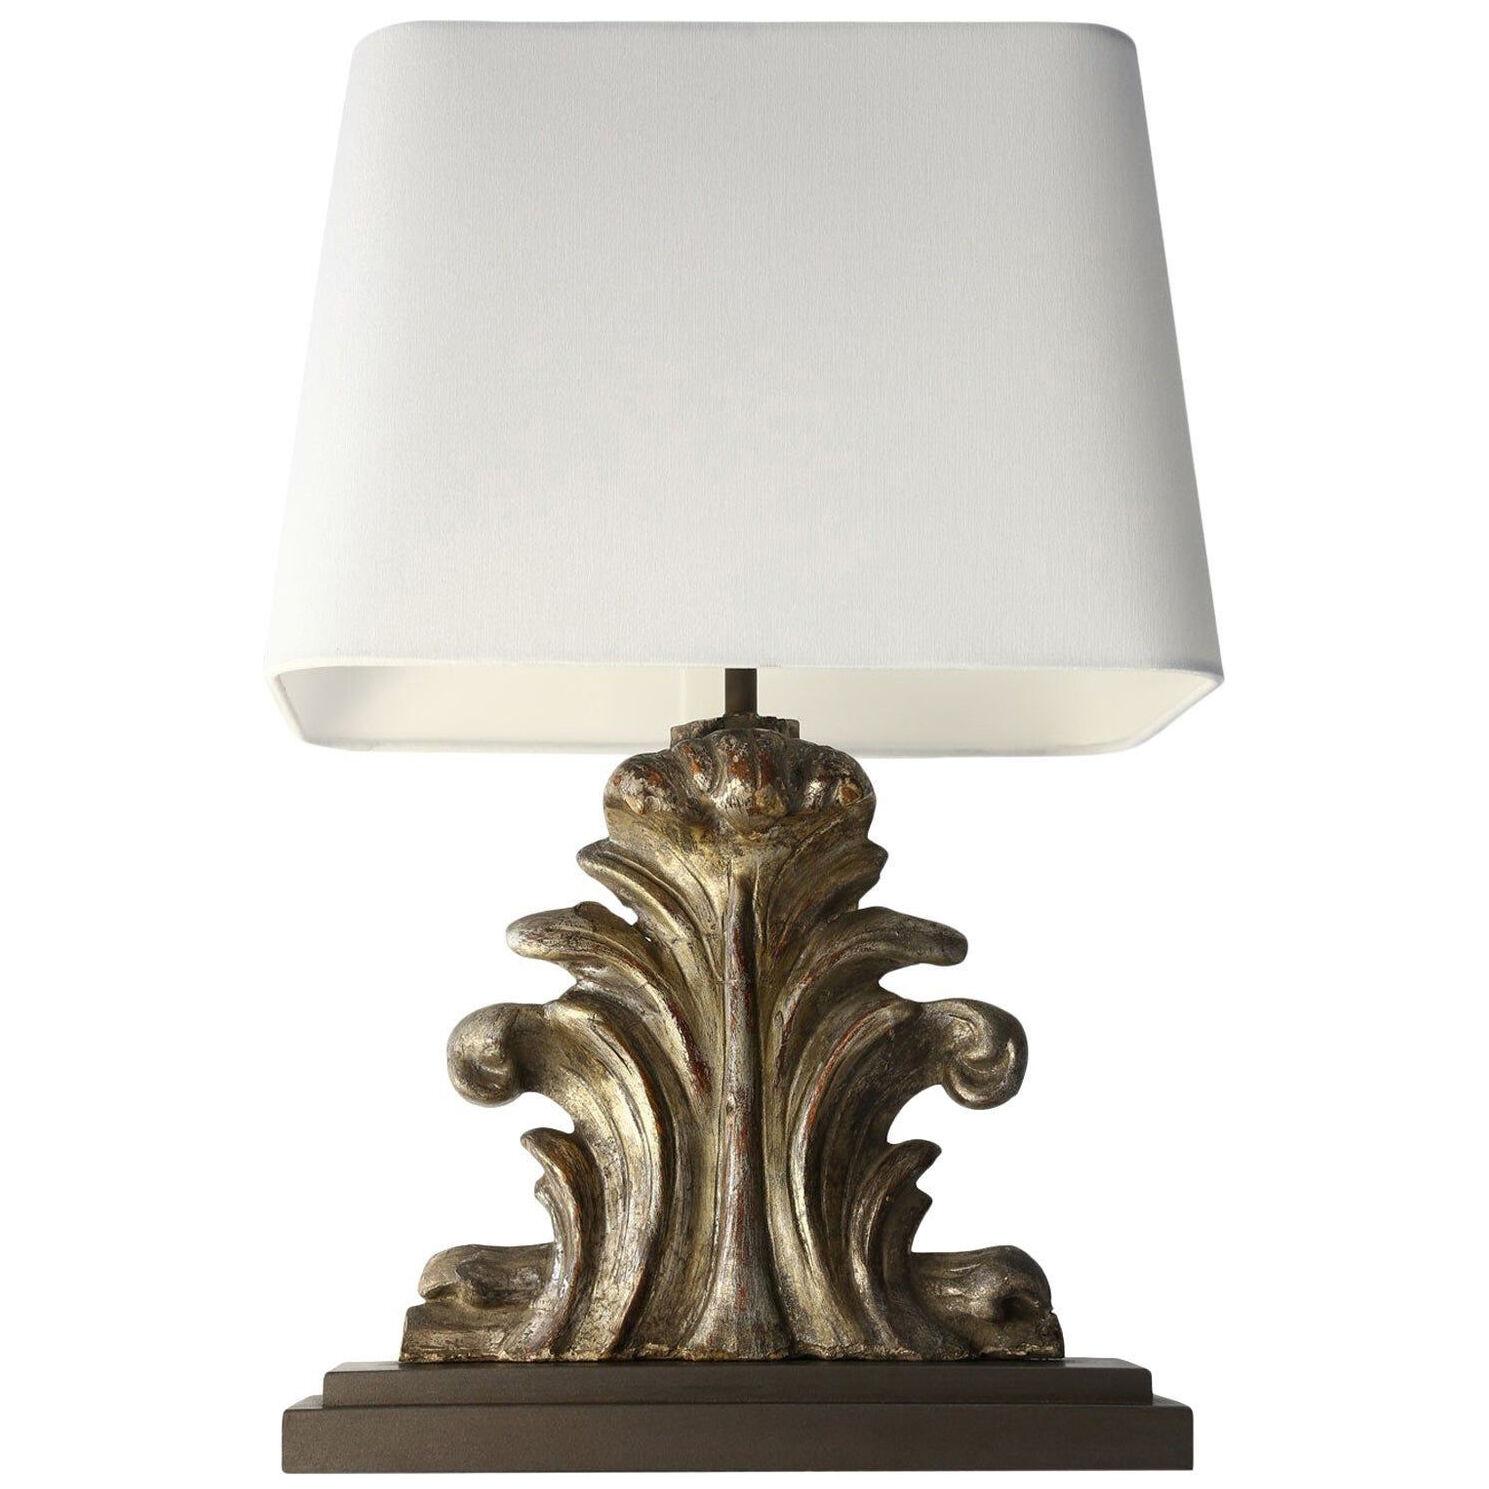 Custom Silvered Table Lamp